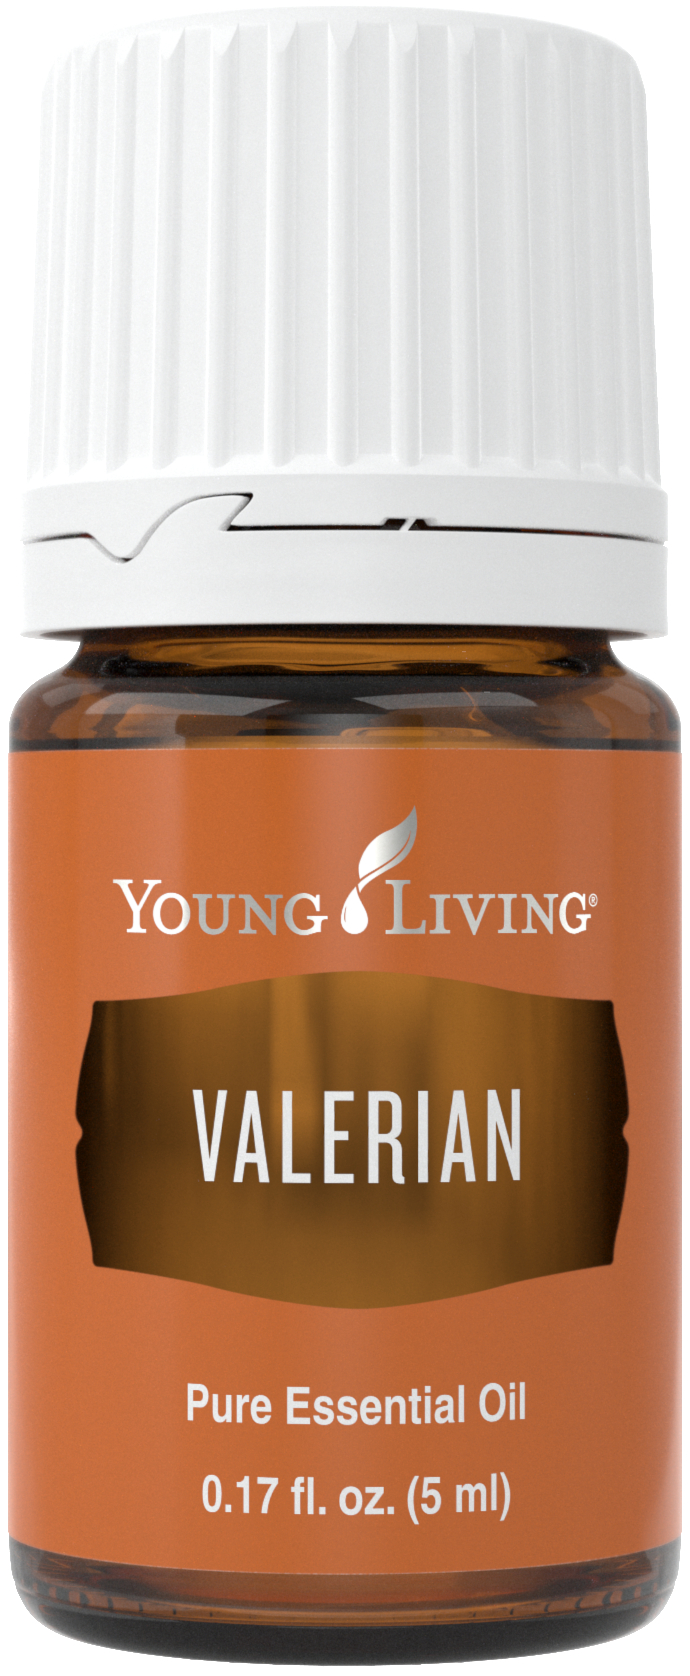 Valerian Essential Oil - Young Living Essential Oils